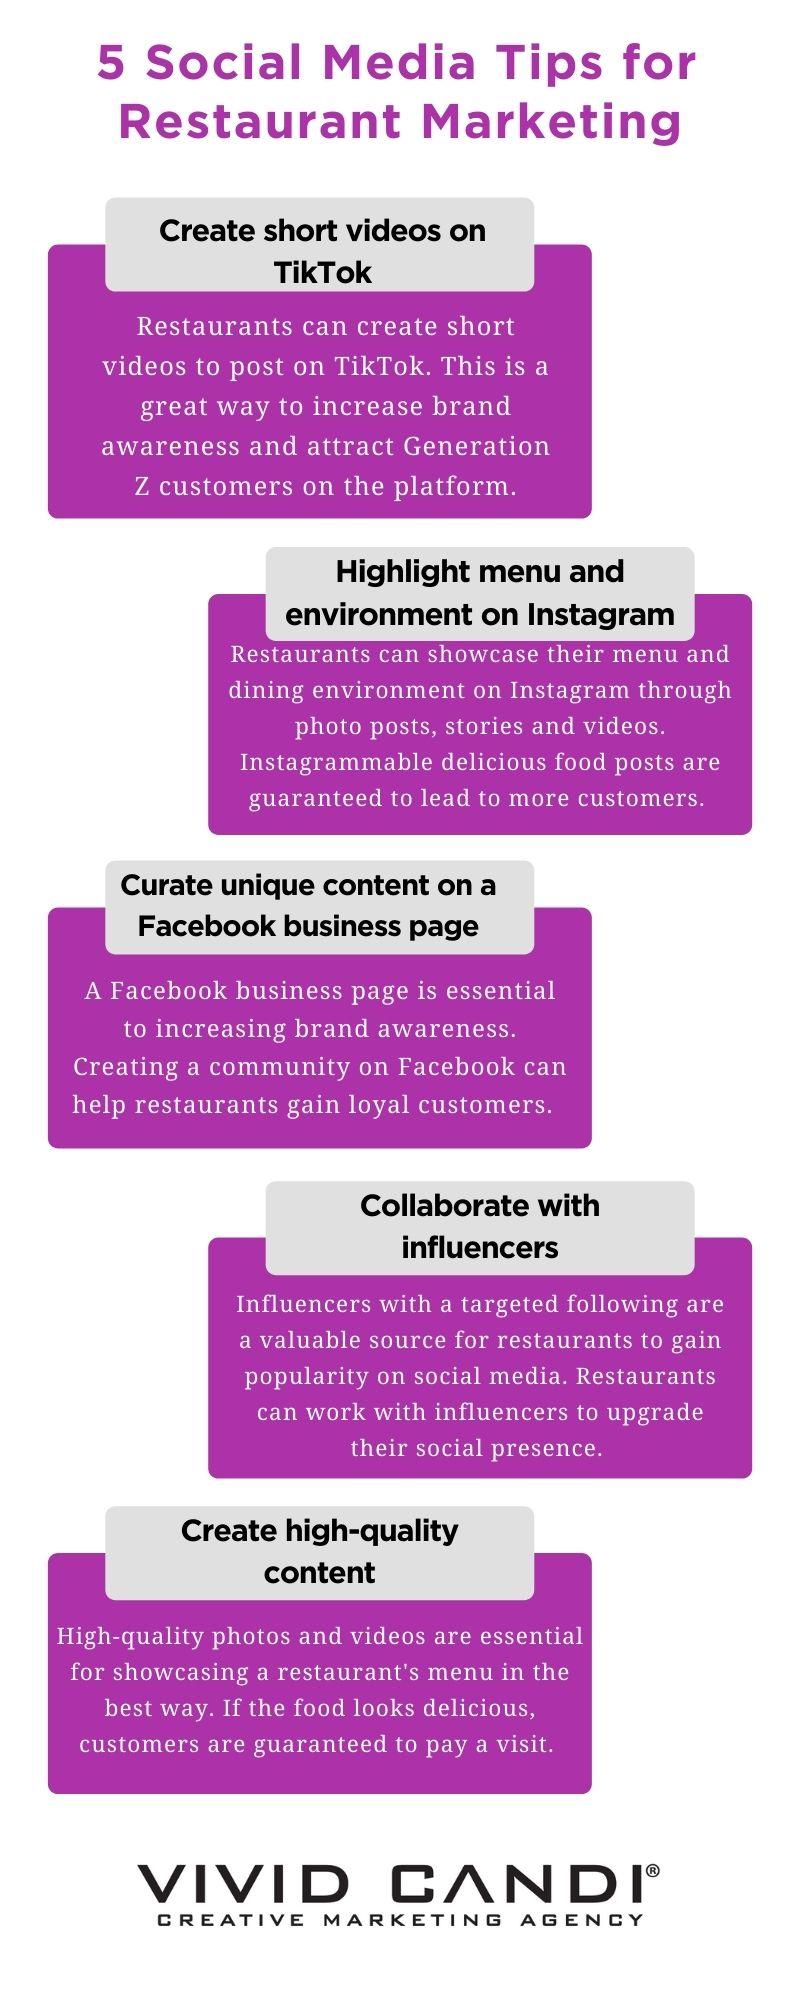 5 Social Media Marketing Tips for Restaurant